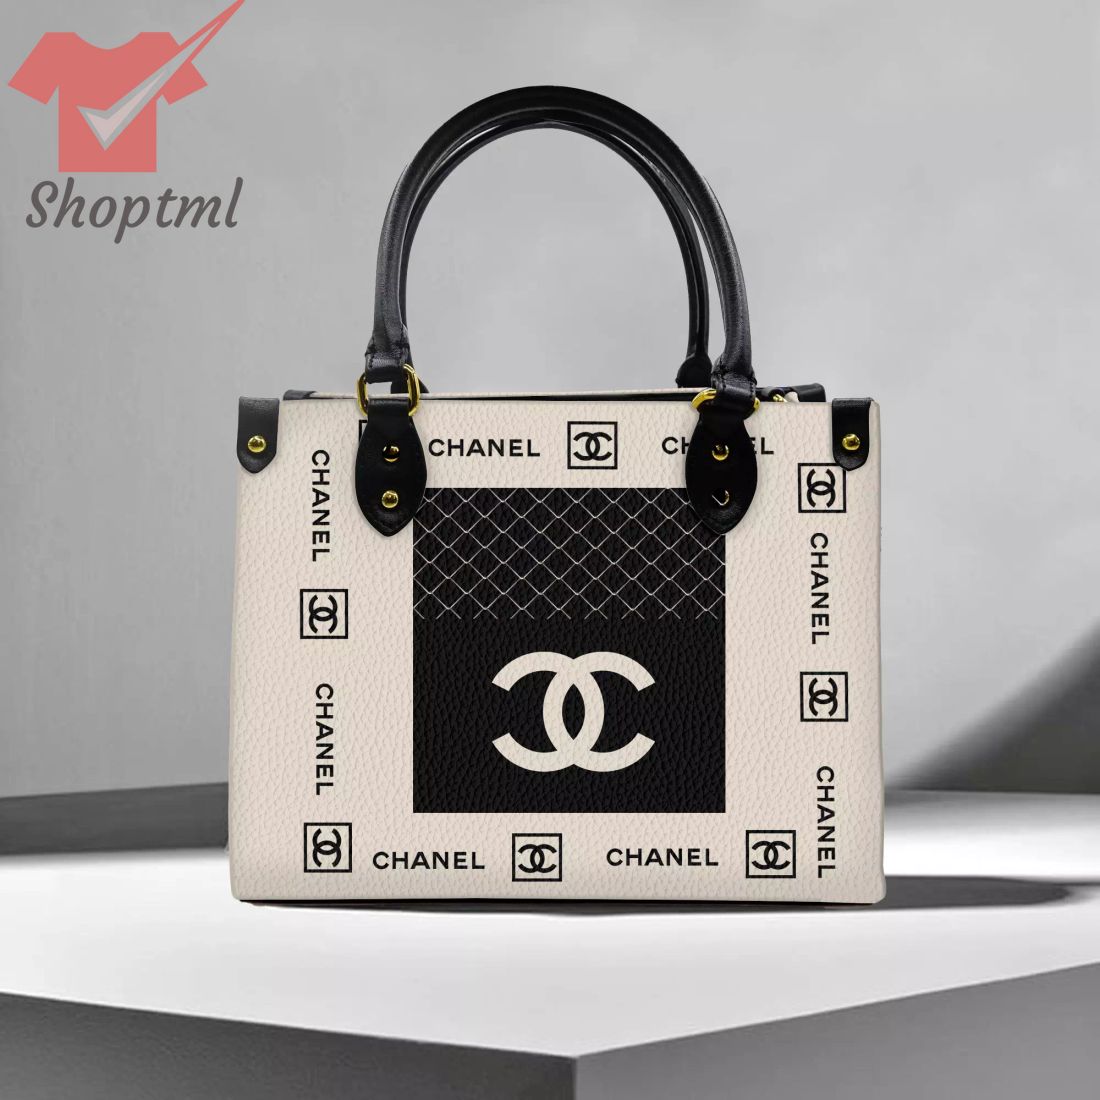 Chanel Beige Luxury Brand Women Leather Handbag